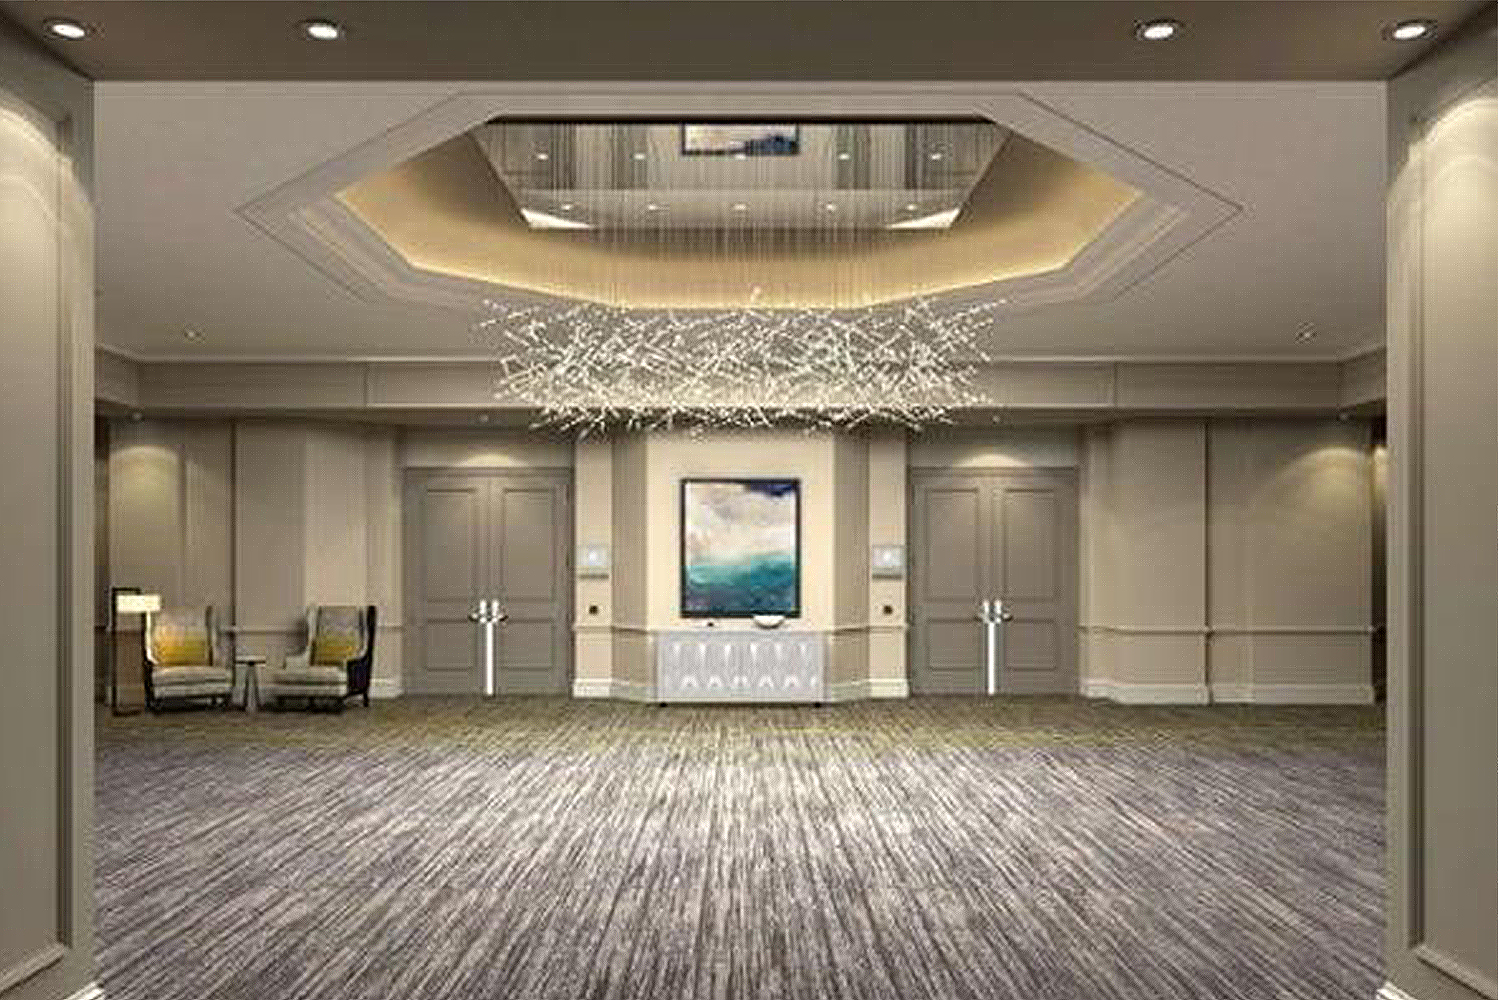 JW Marriott Atlanta Buckhead completes 3M renovation of event space